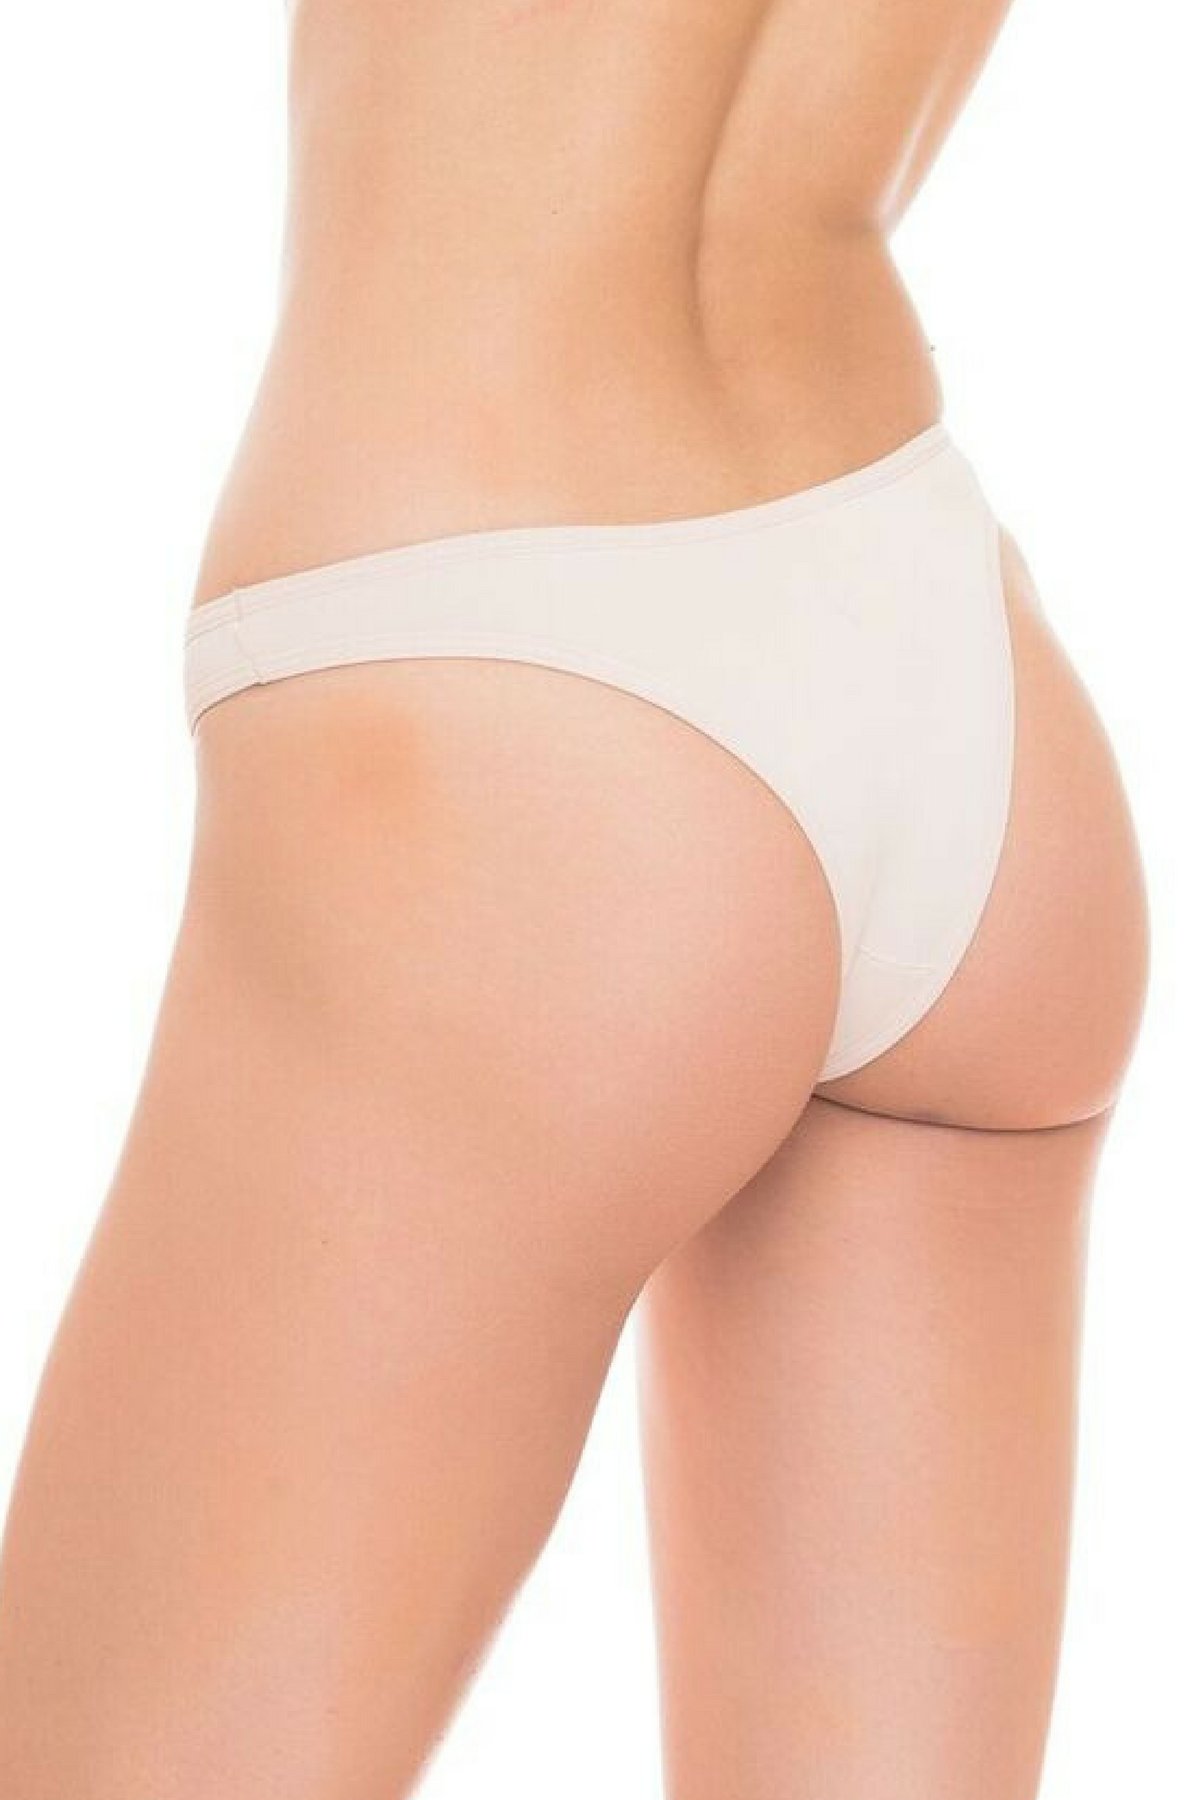 Beige Brazilian tanga underwear panties